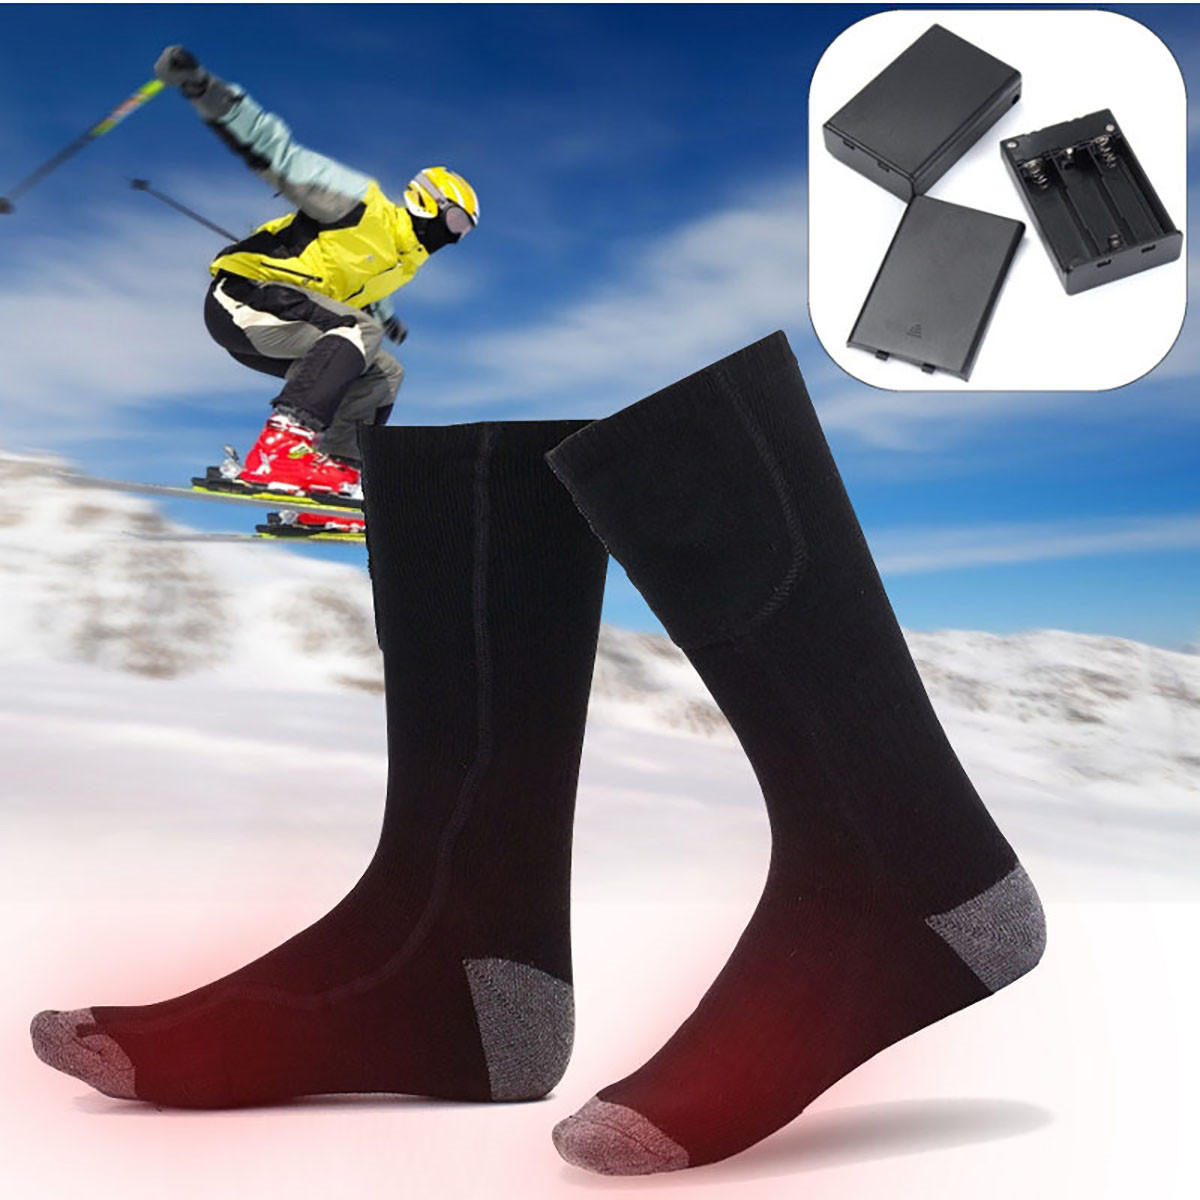 1 Pair Cotton Electric Heating Cotton Socks Foot Warmer Winter Feet Thermal SKiing Riding Heated Socks